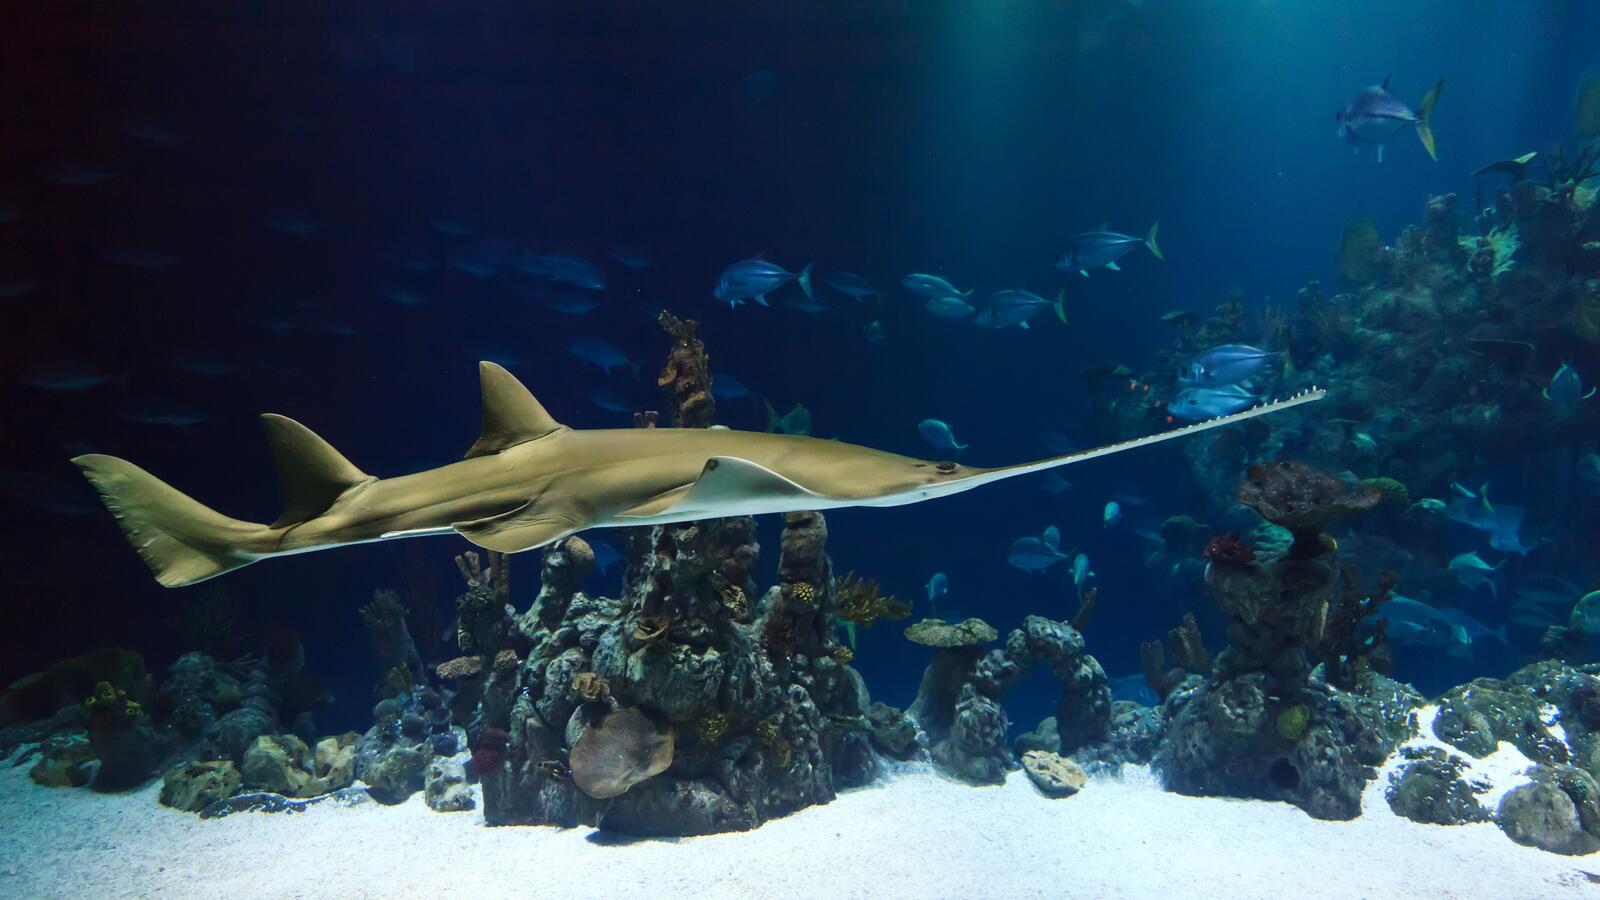 Free photo A sword shark swims near coral reefs